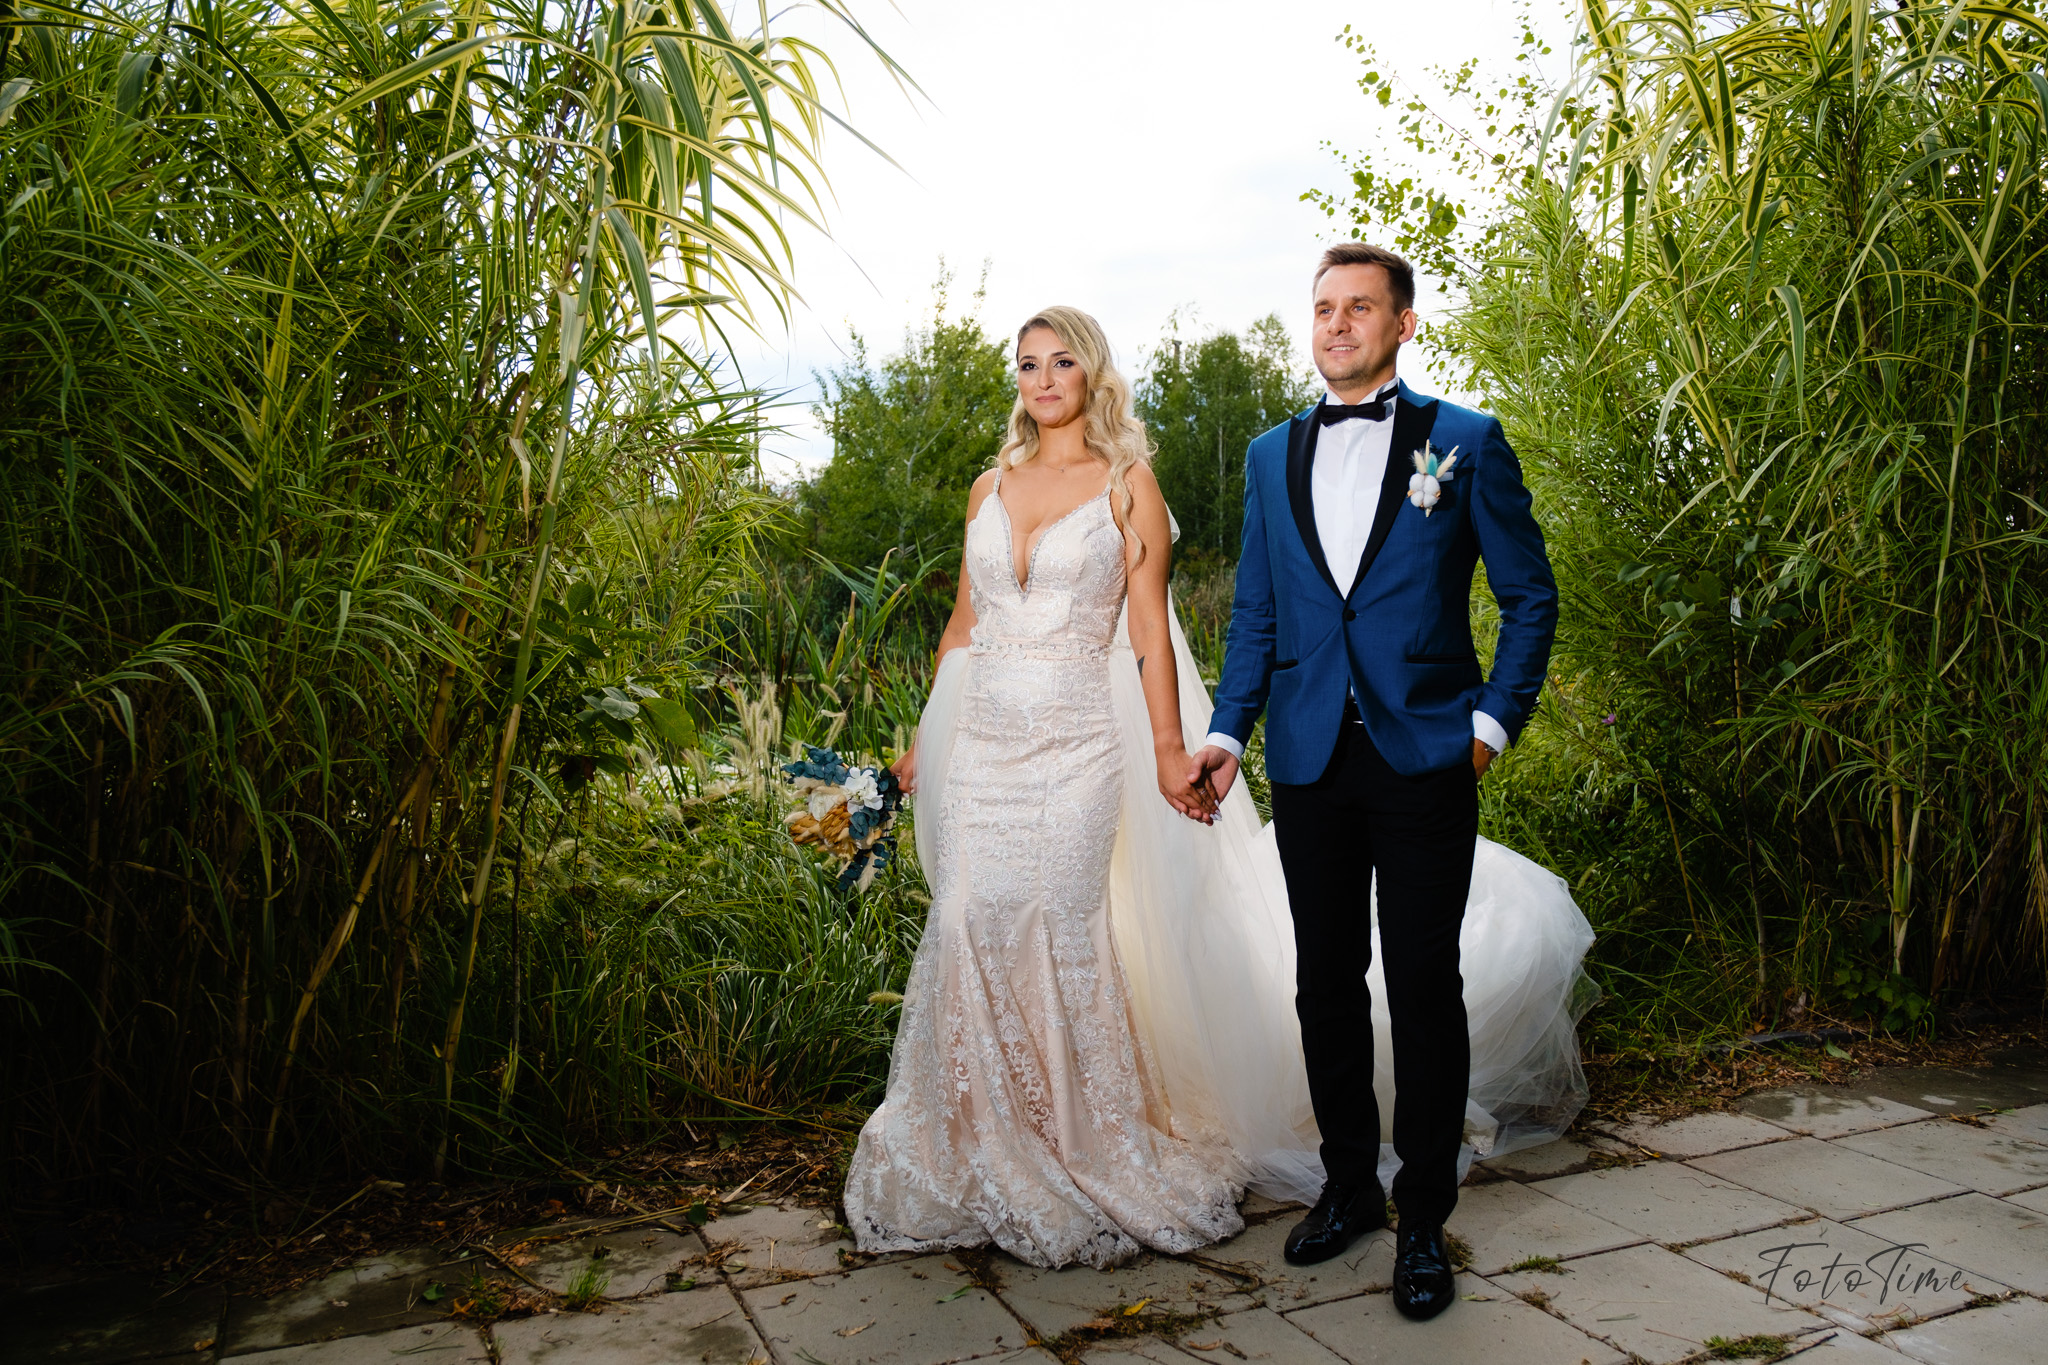 Sedinta foto in ziua nuntii cu miri la Lagoo Snagov - FotoTime